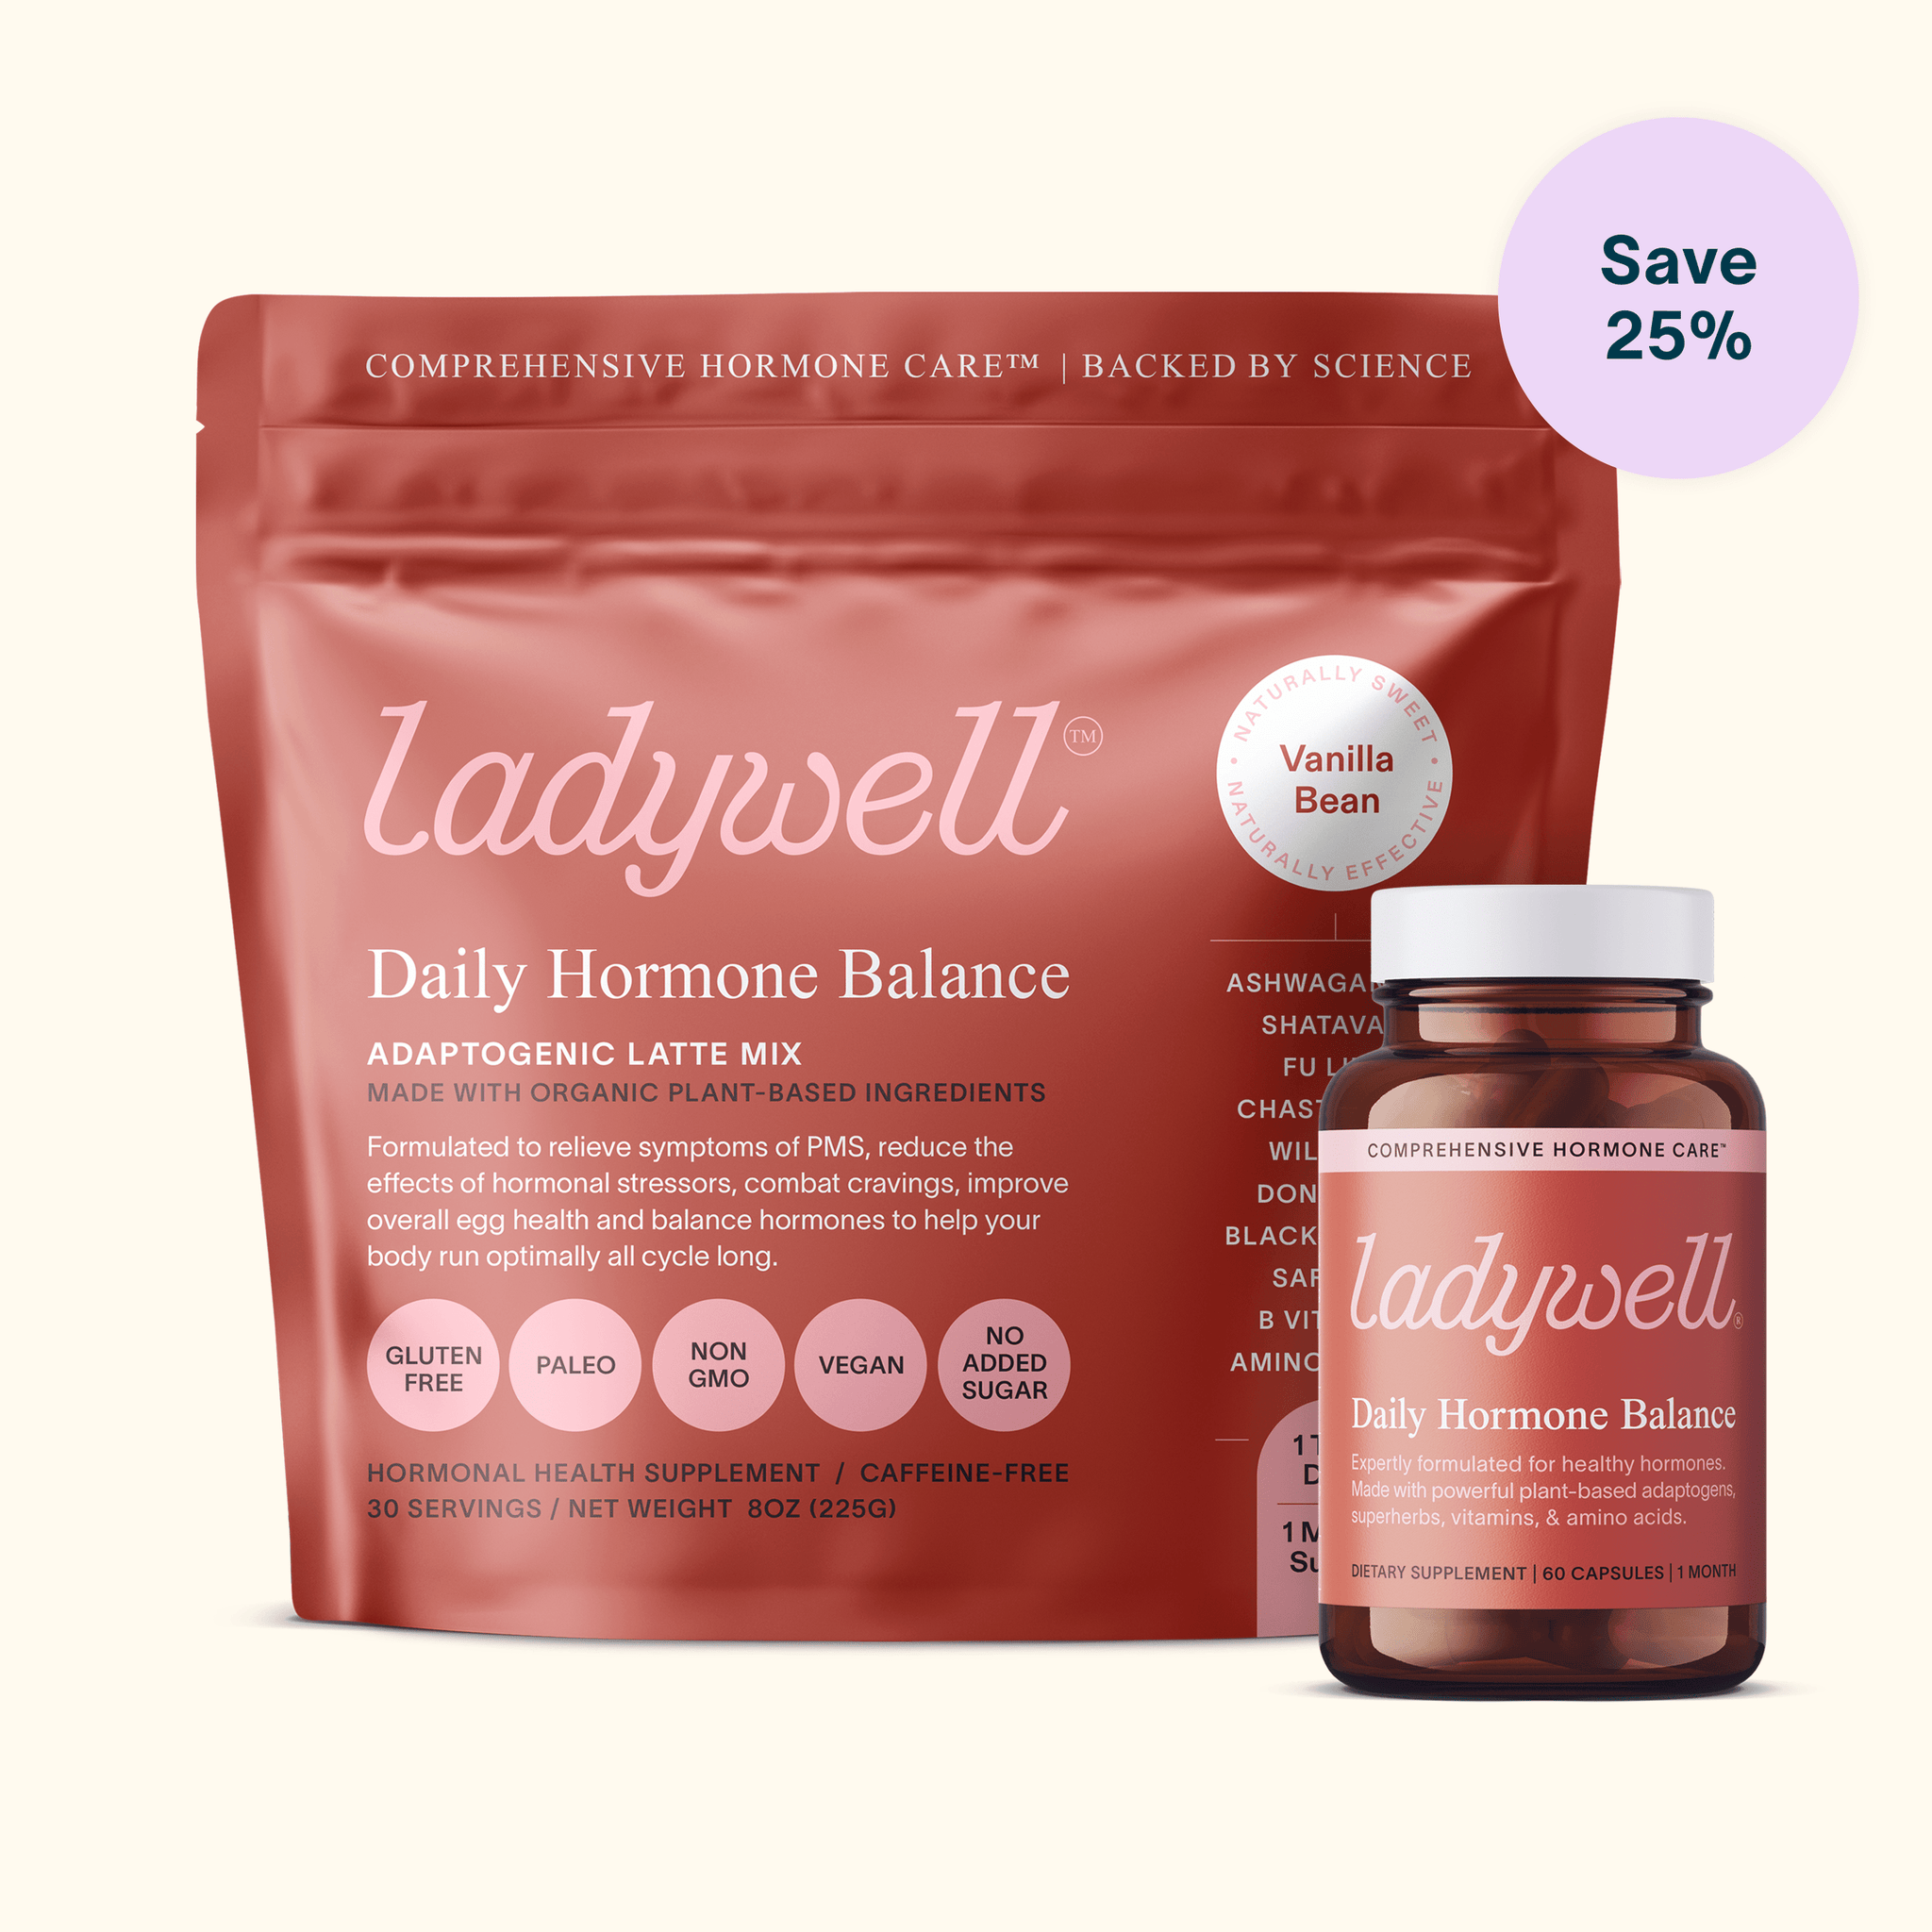 Ladywell - Daily Hormone Balance Bundle